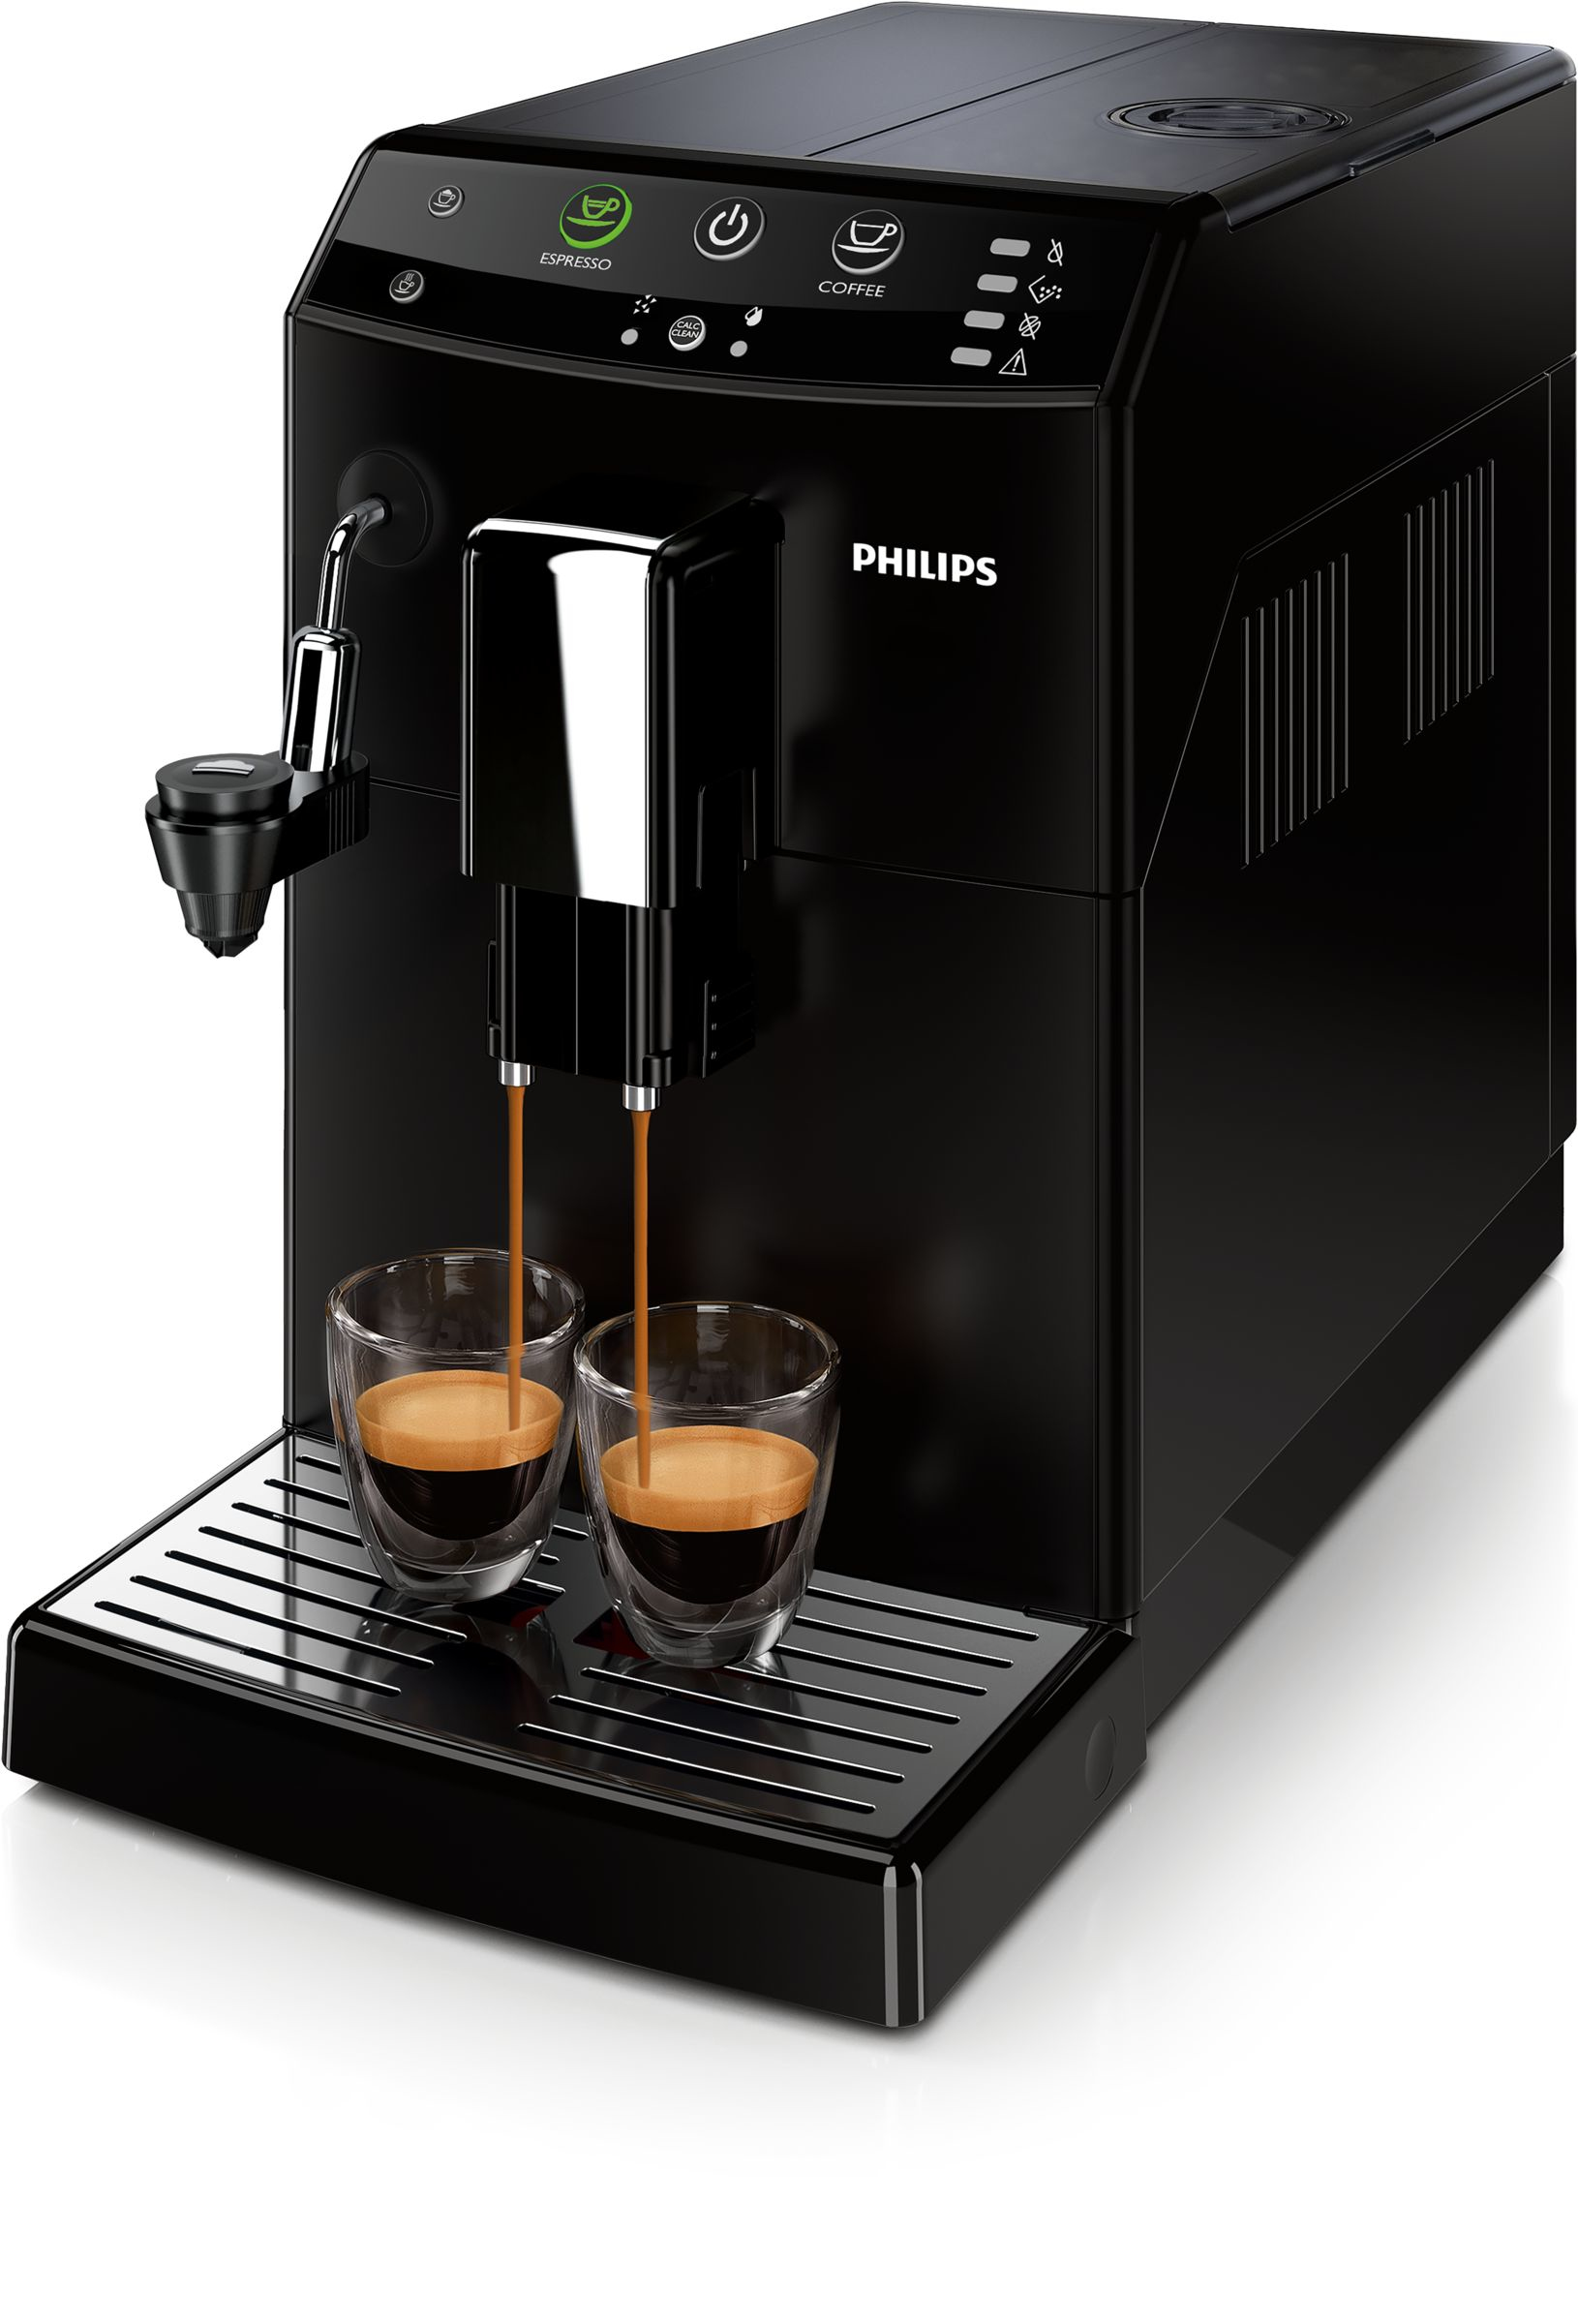 Philips 3000 series HD8824/01R1 coffee maker